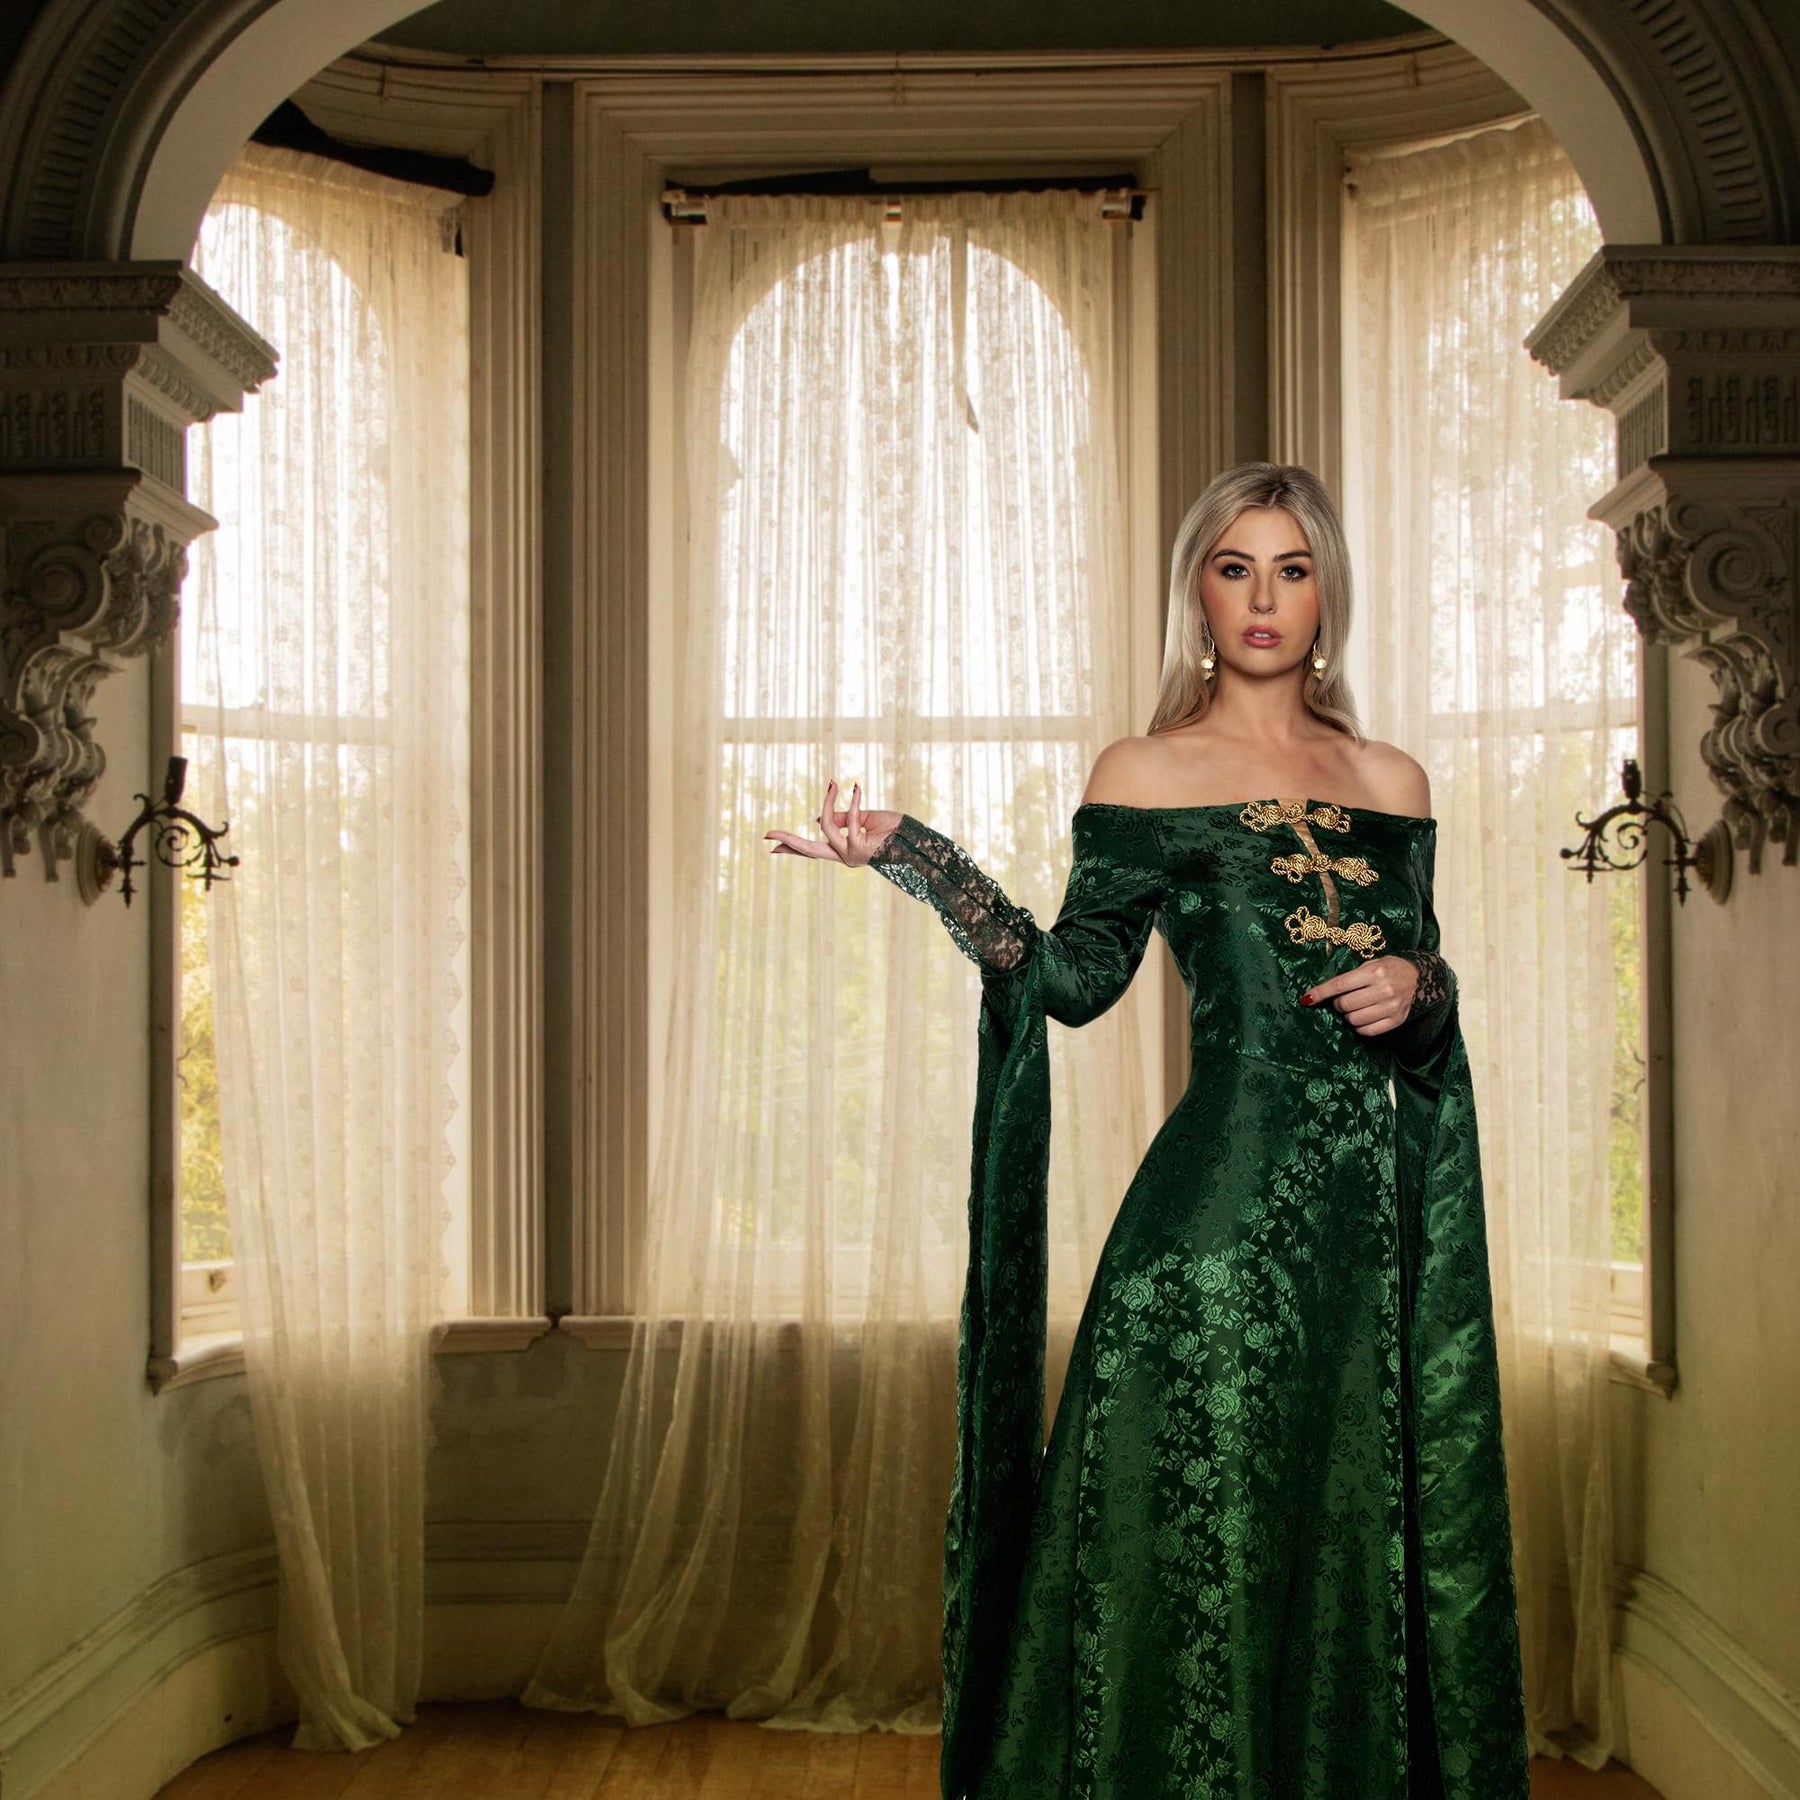 Renaissance Queen Dress Adult Costume